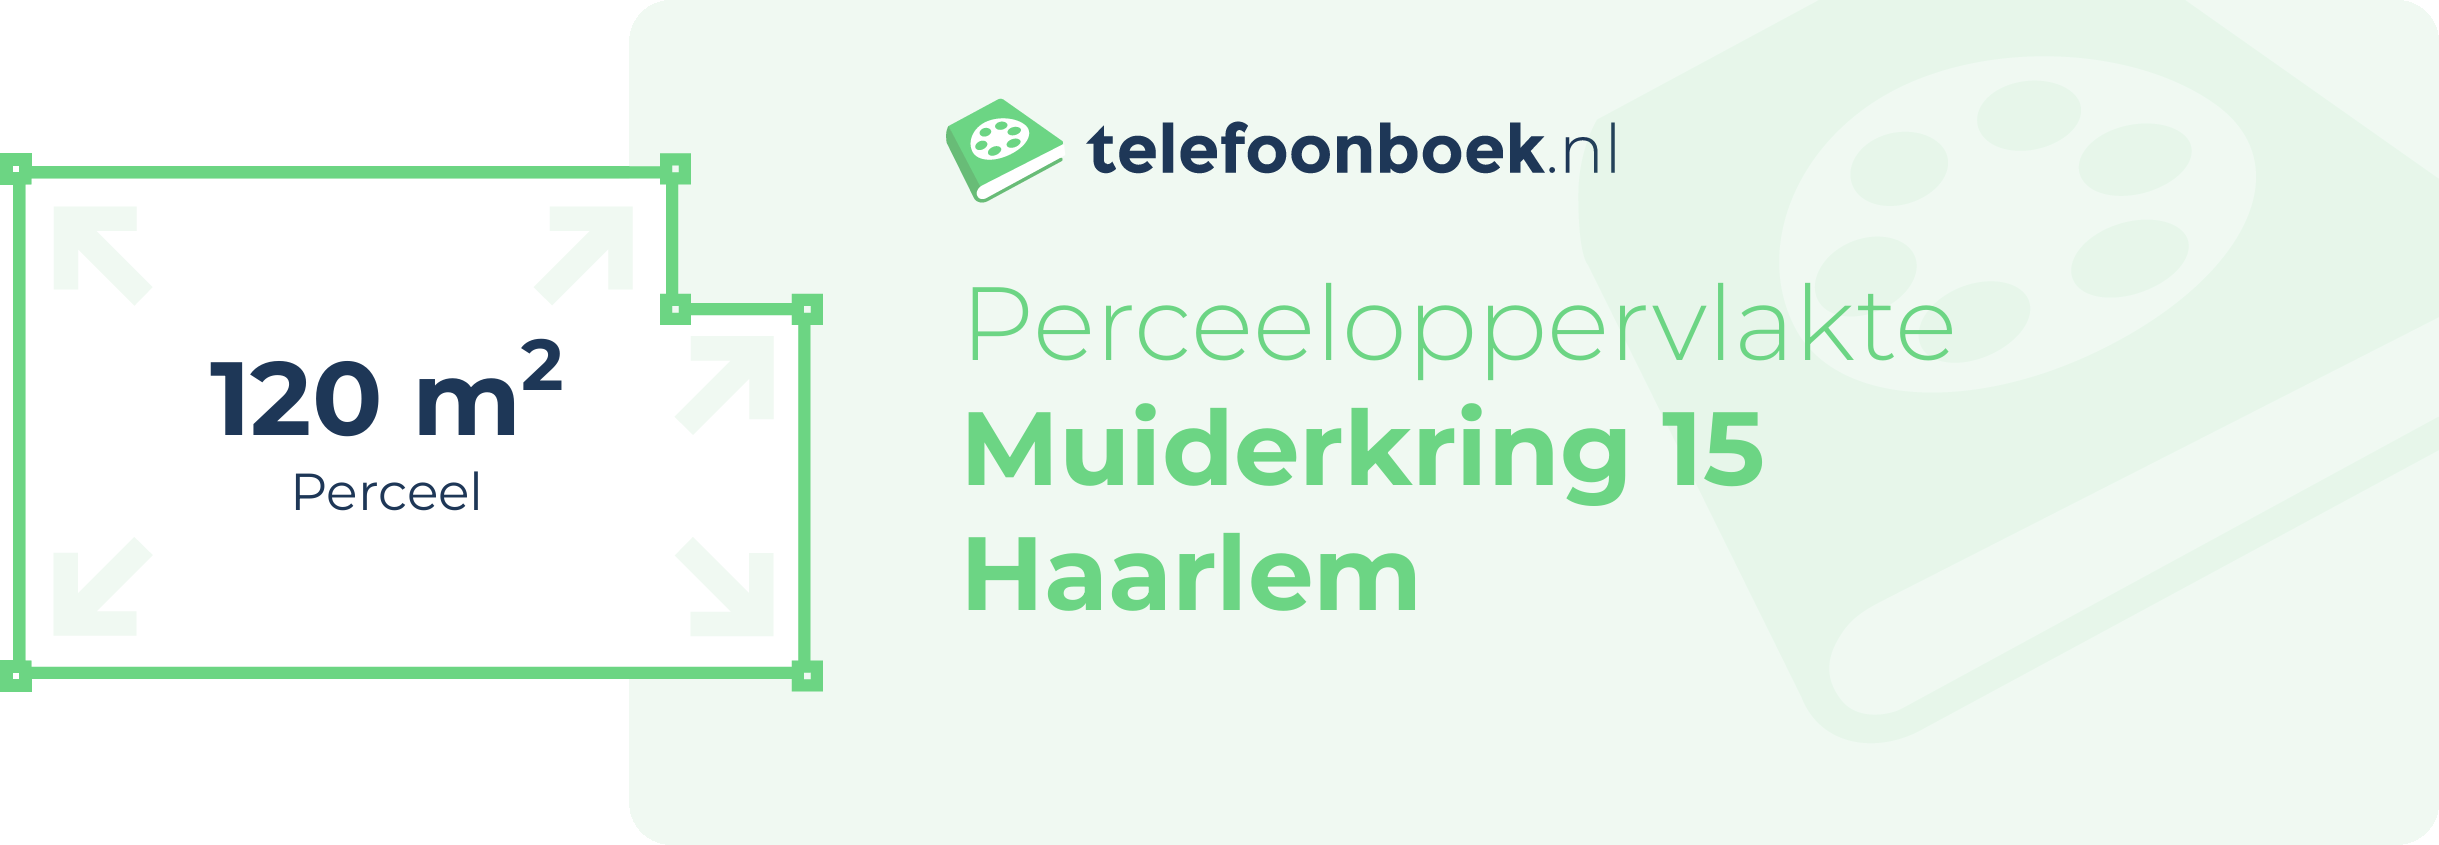 Perceeloppervlakte Muiderkring 15 Haarlem